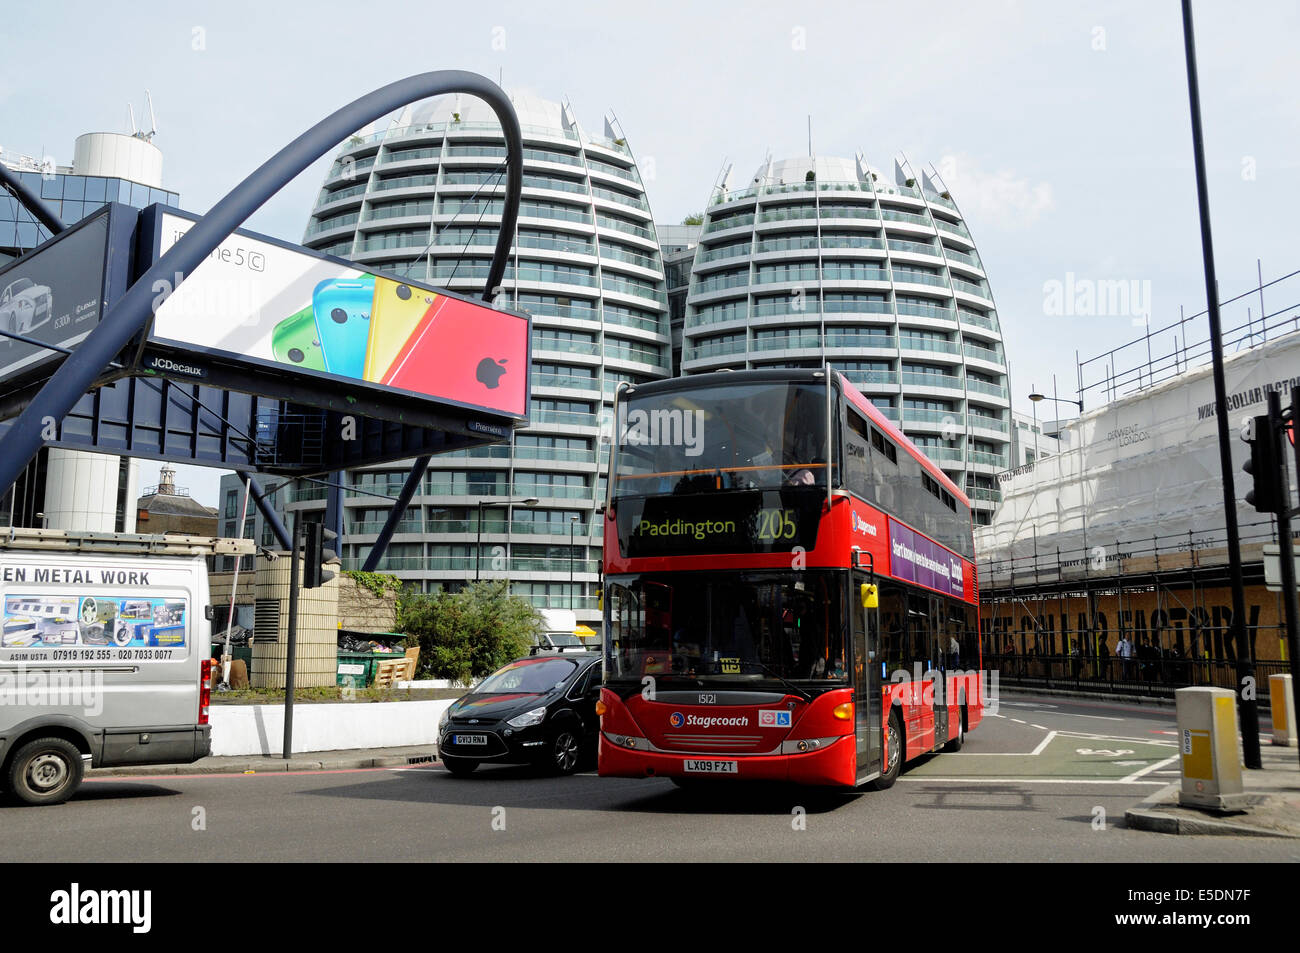 Bus, Old Street Roundabout, London Borough of Islington, England Britain UK Stock Photo